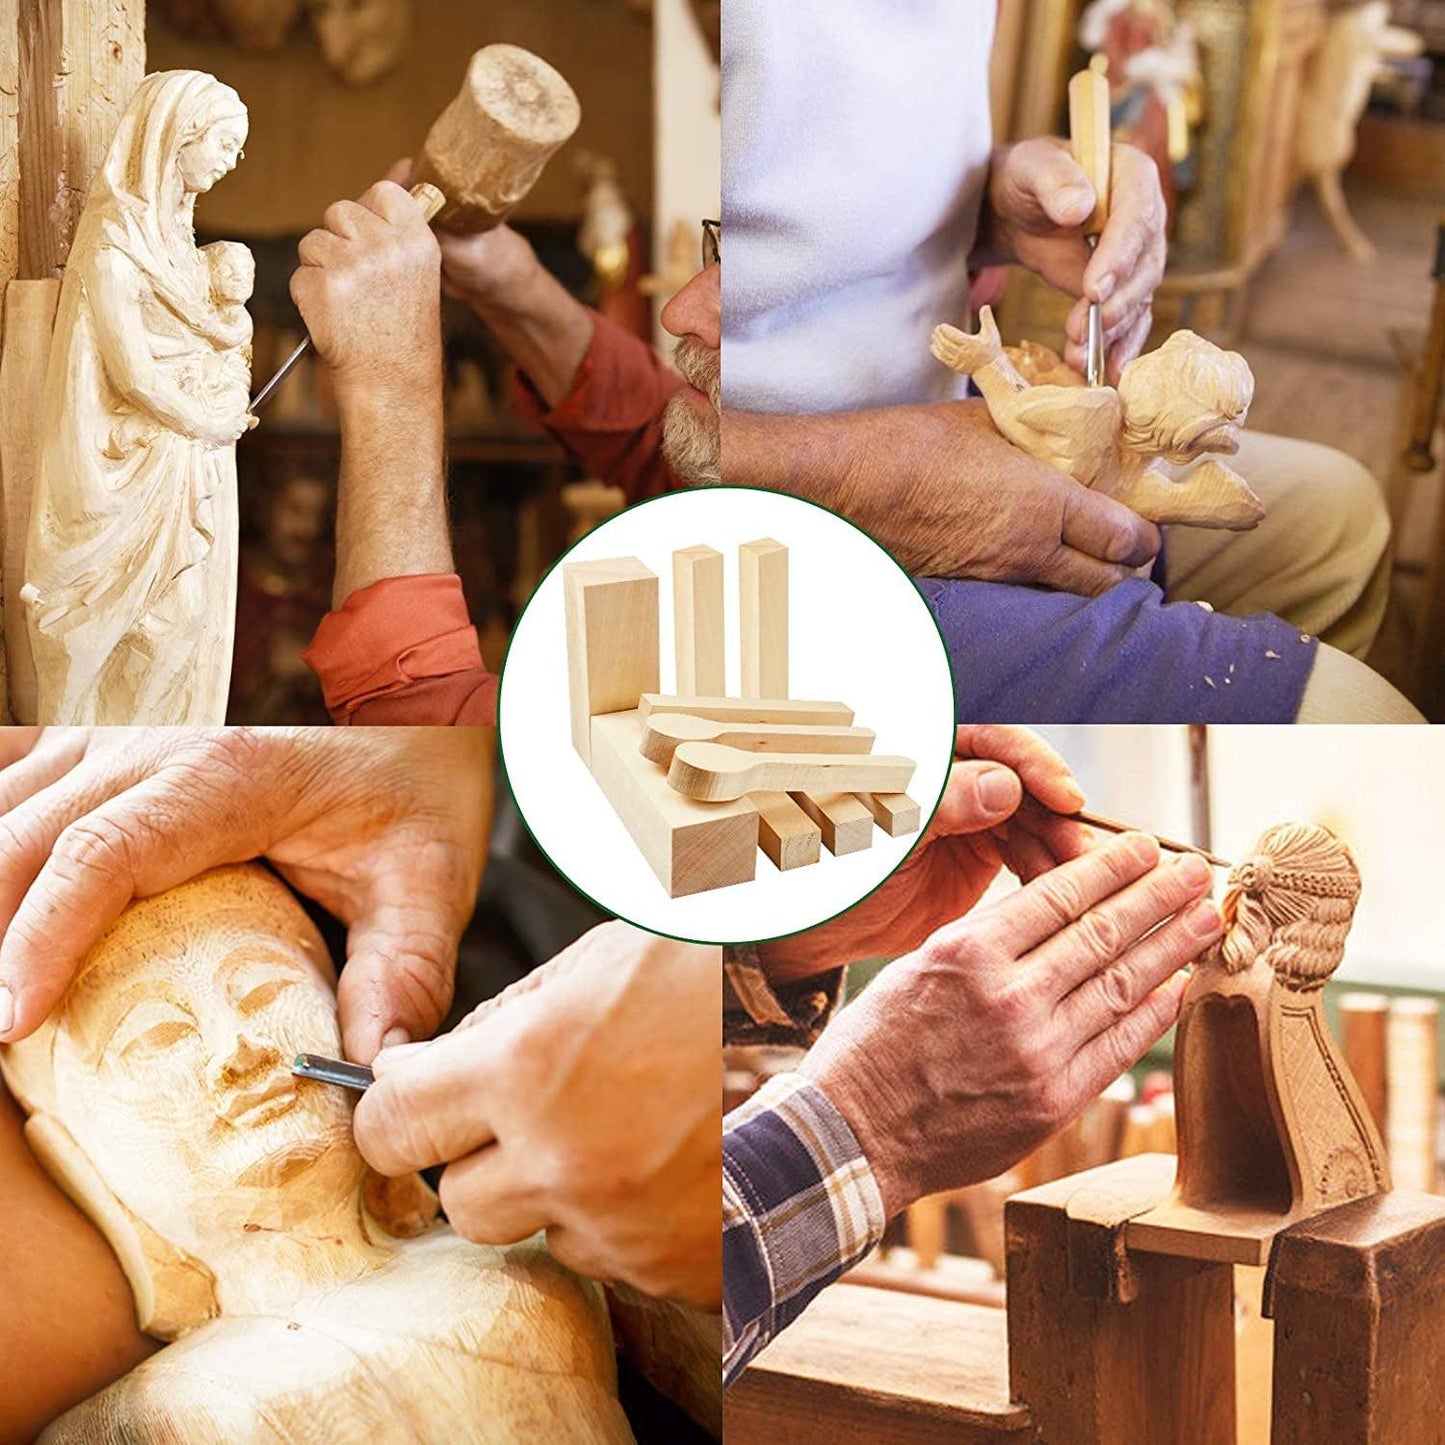 10 Pcs Unfinished Natural Basswood Carving Blocks Set,Premium Spoon Blank,Wood Blocks - WoodArtSupply